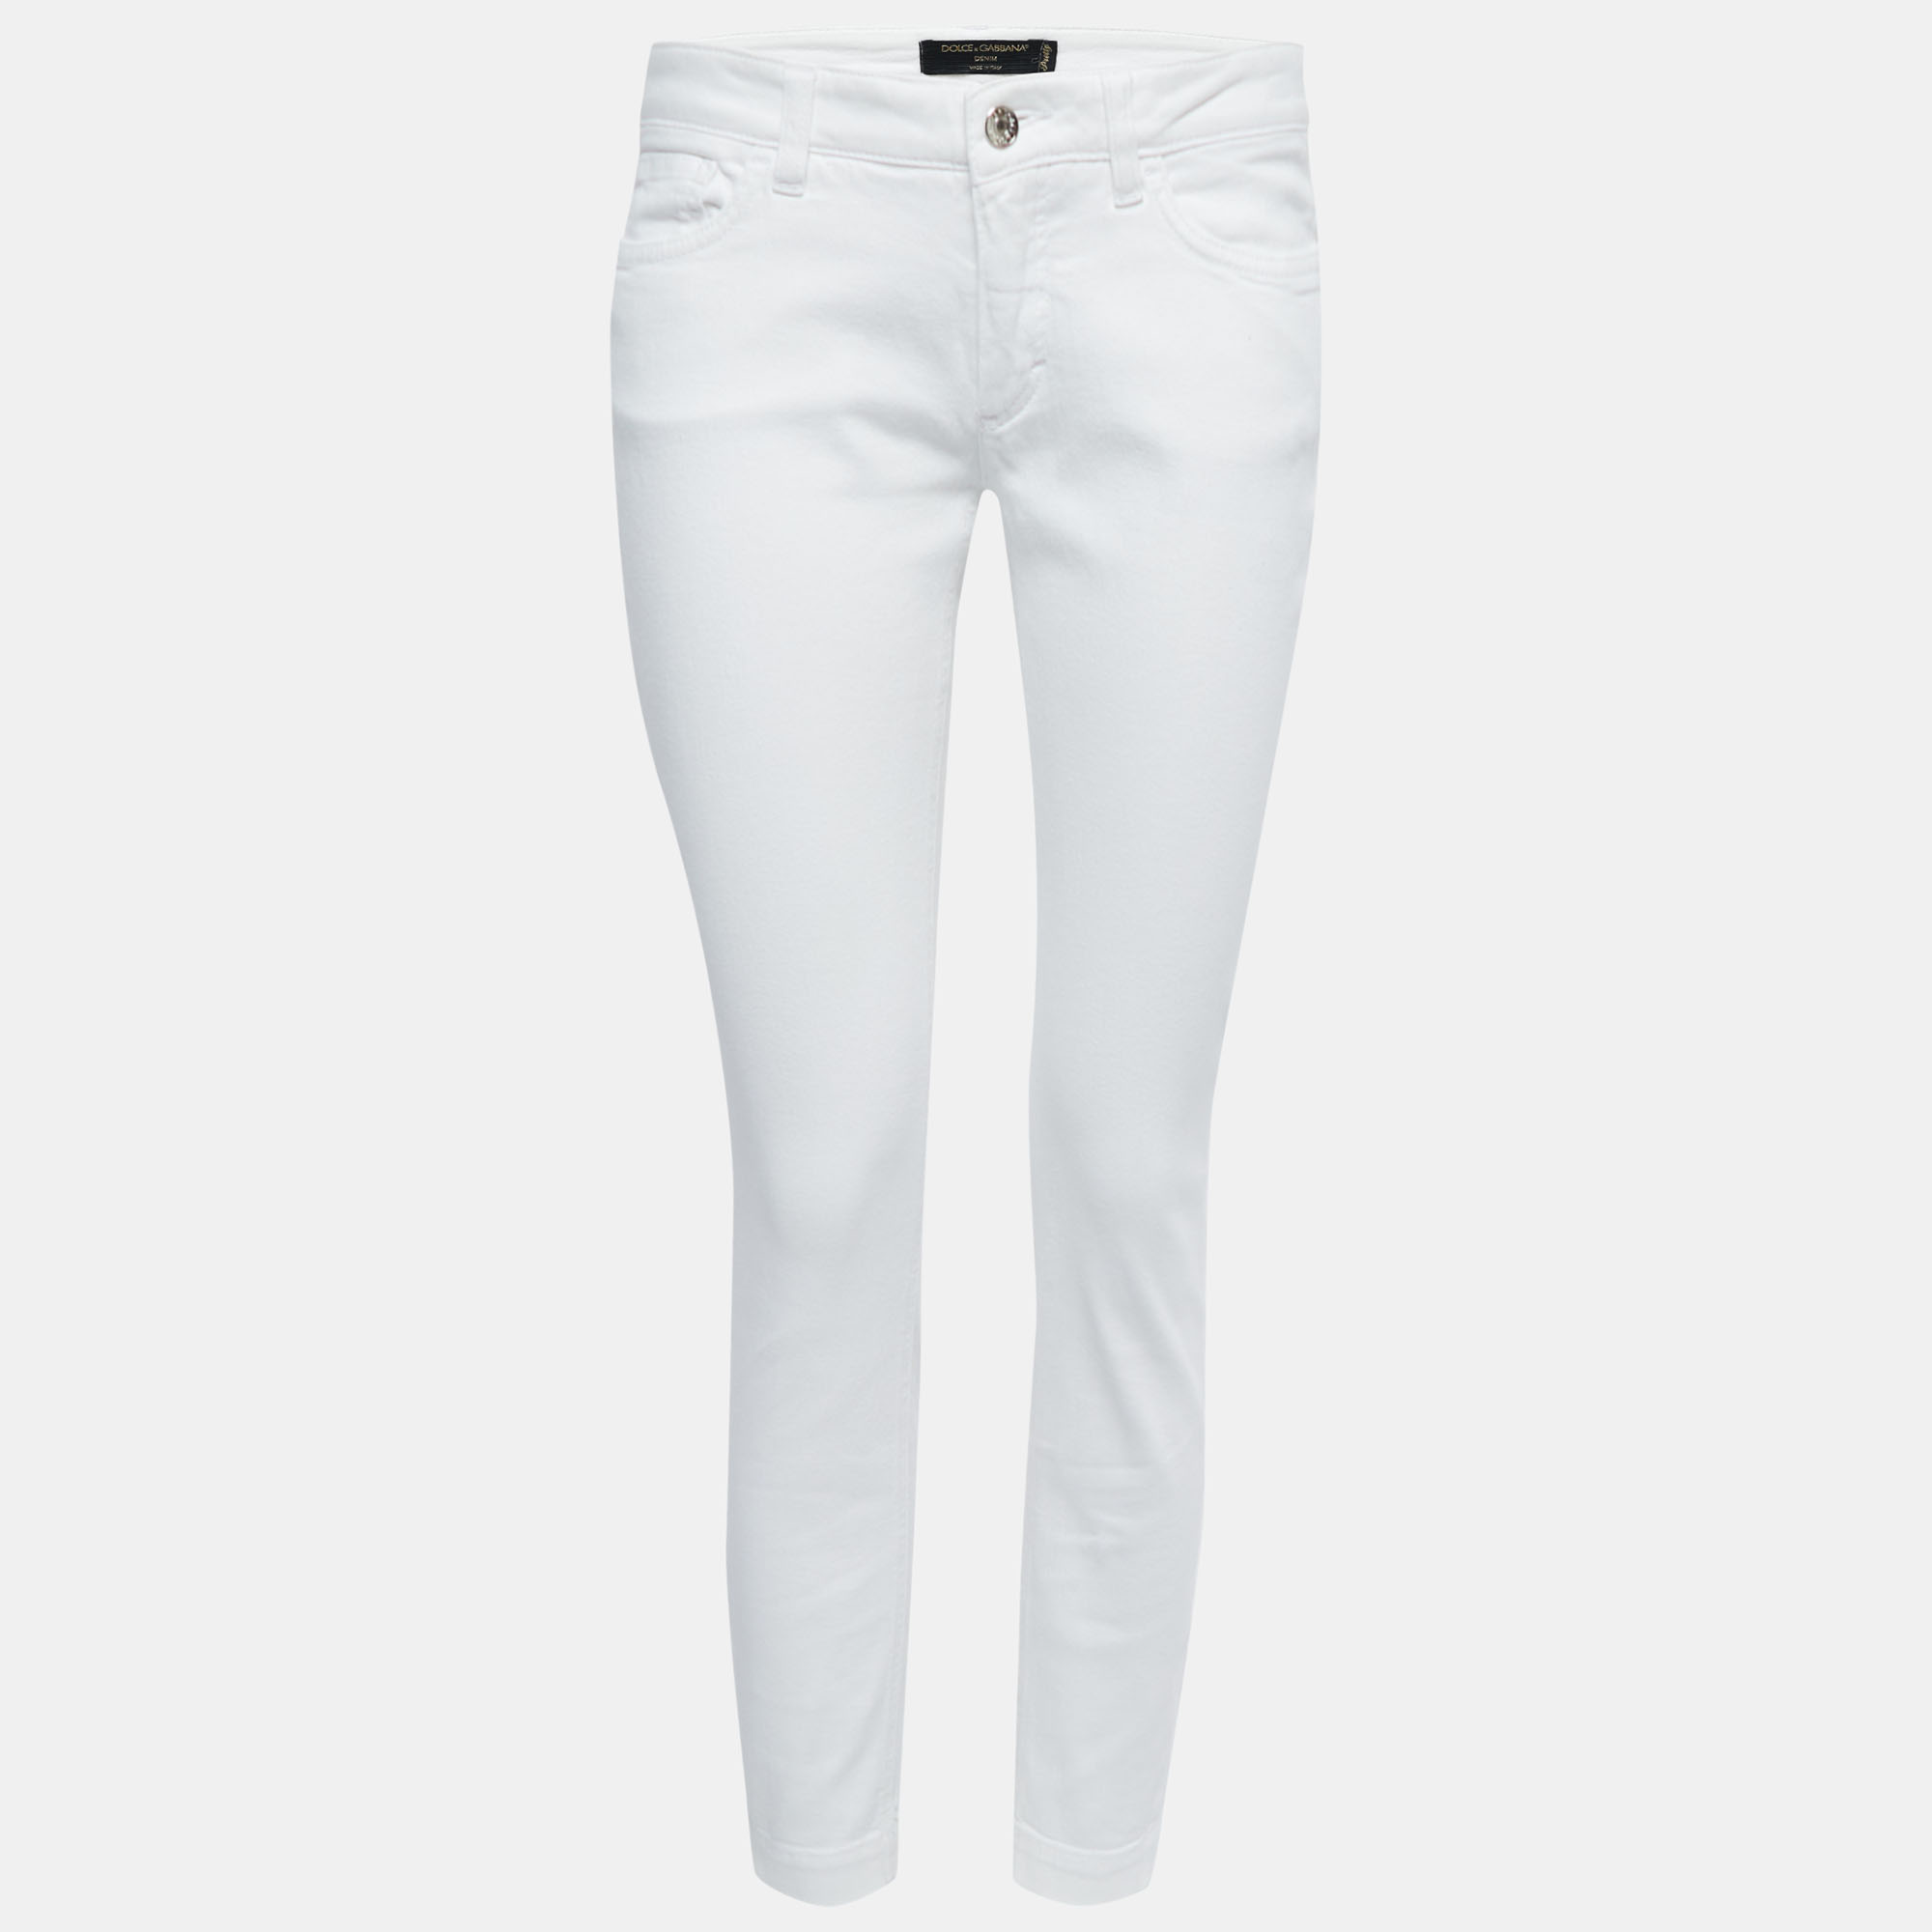 Dolce & Gabbana White Denim Pretty Skinny Jeans M Waist 30